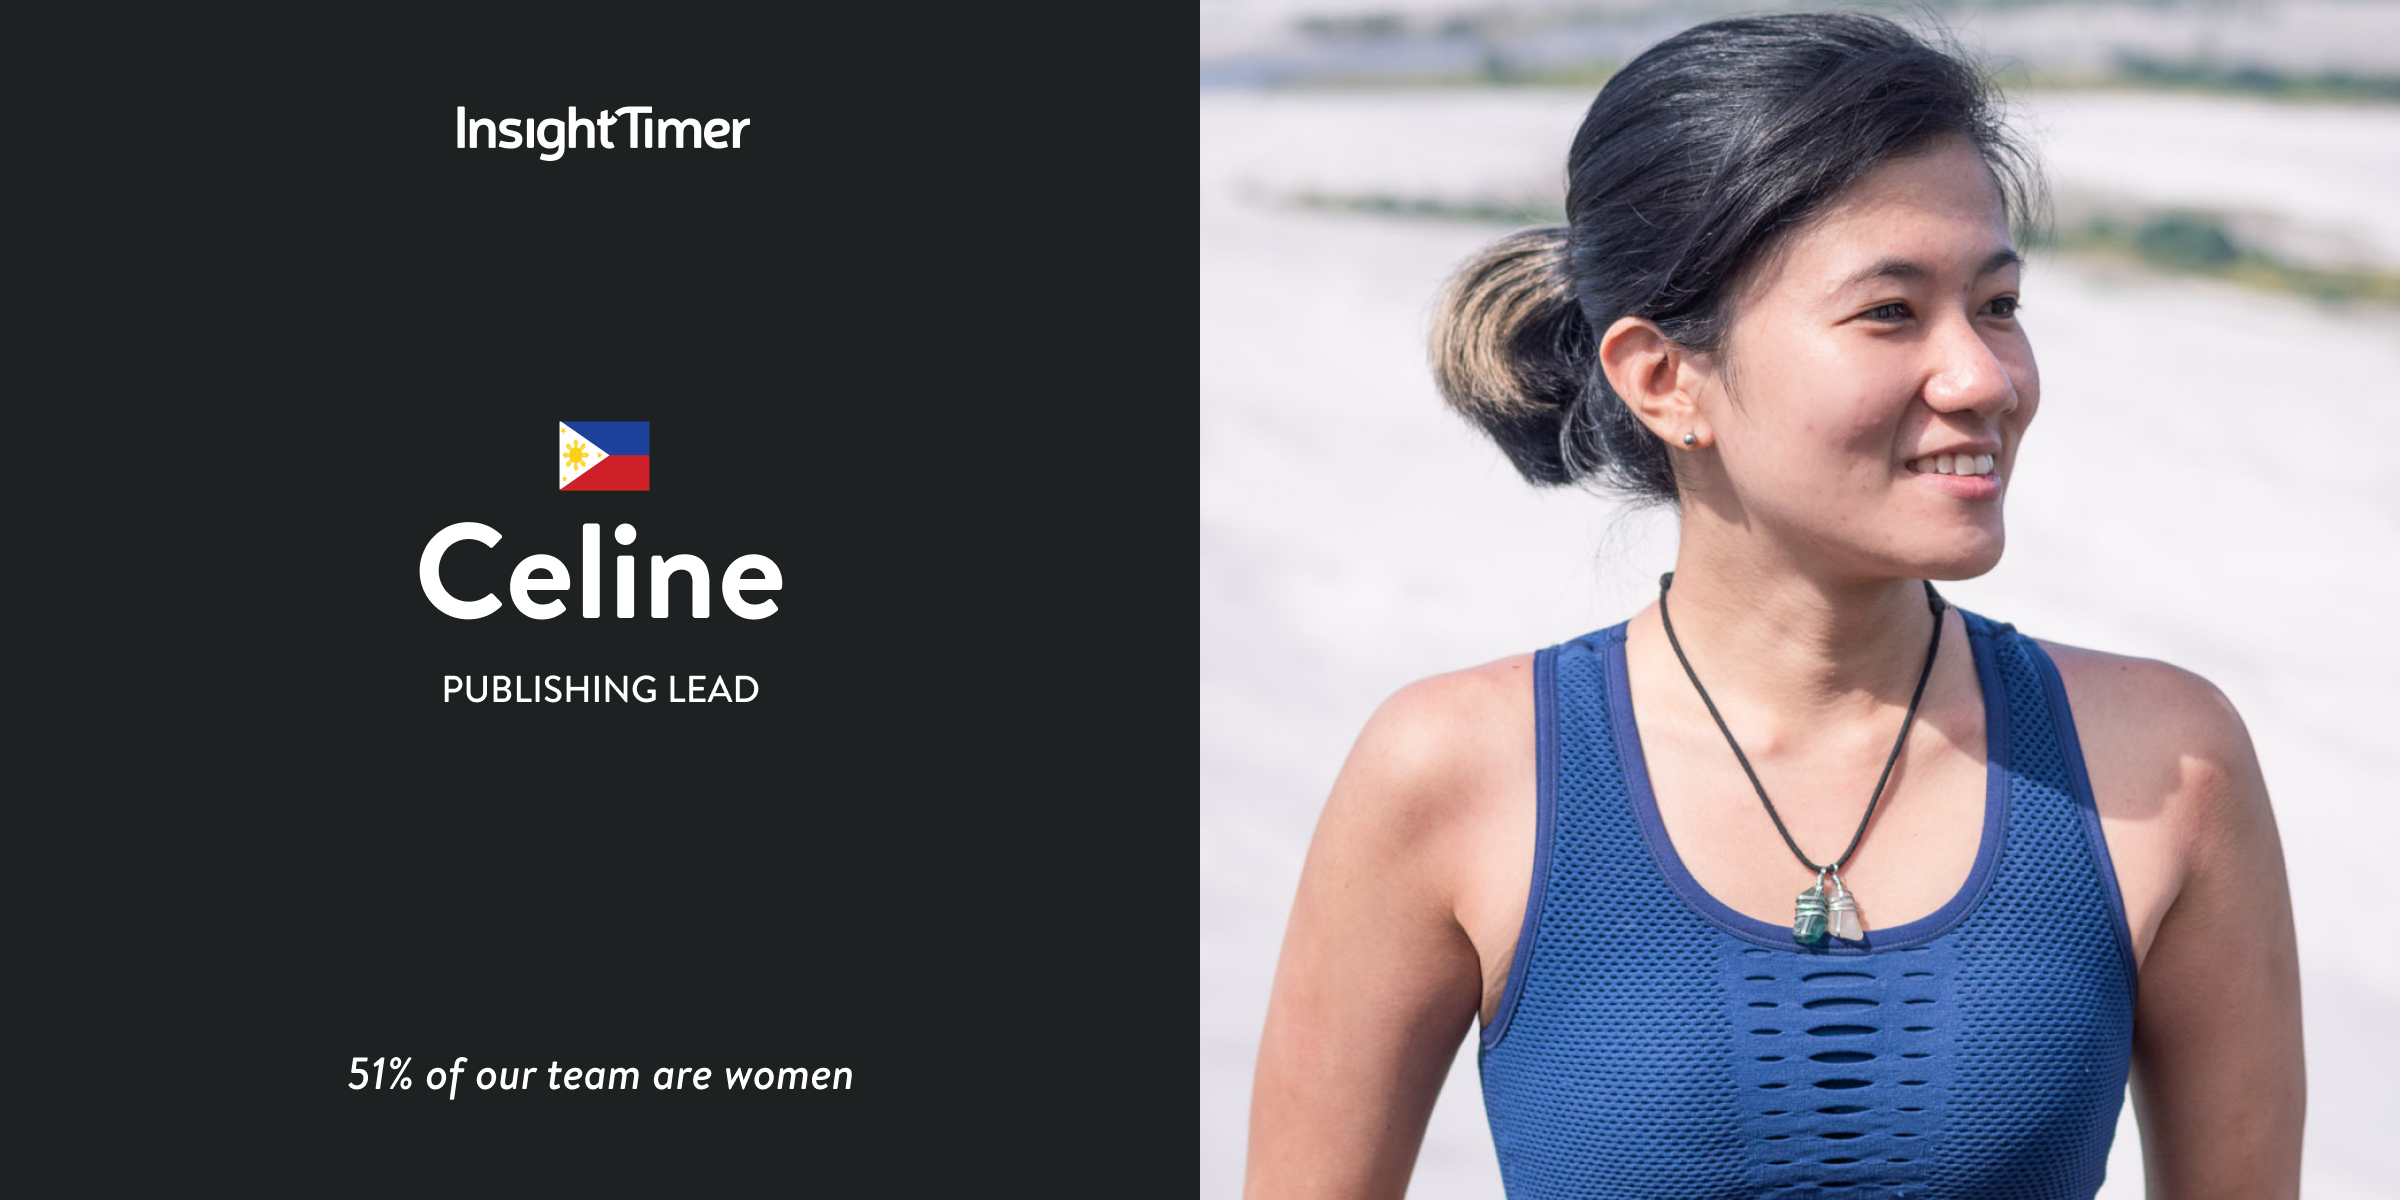 Meet Celine – Publishing Lead